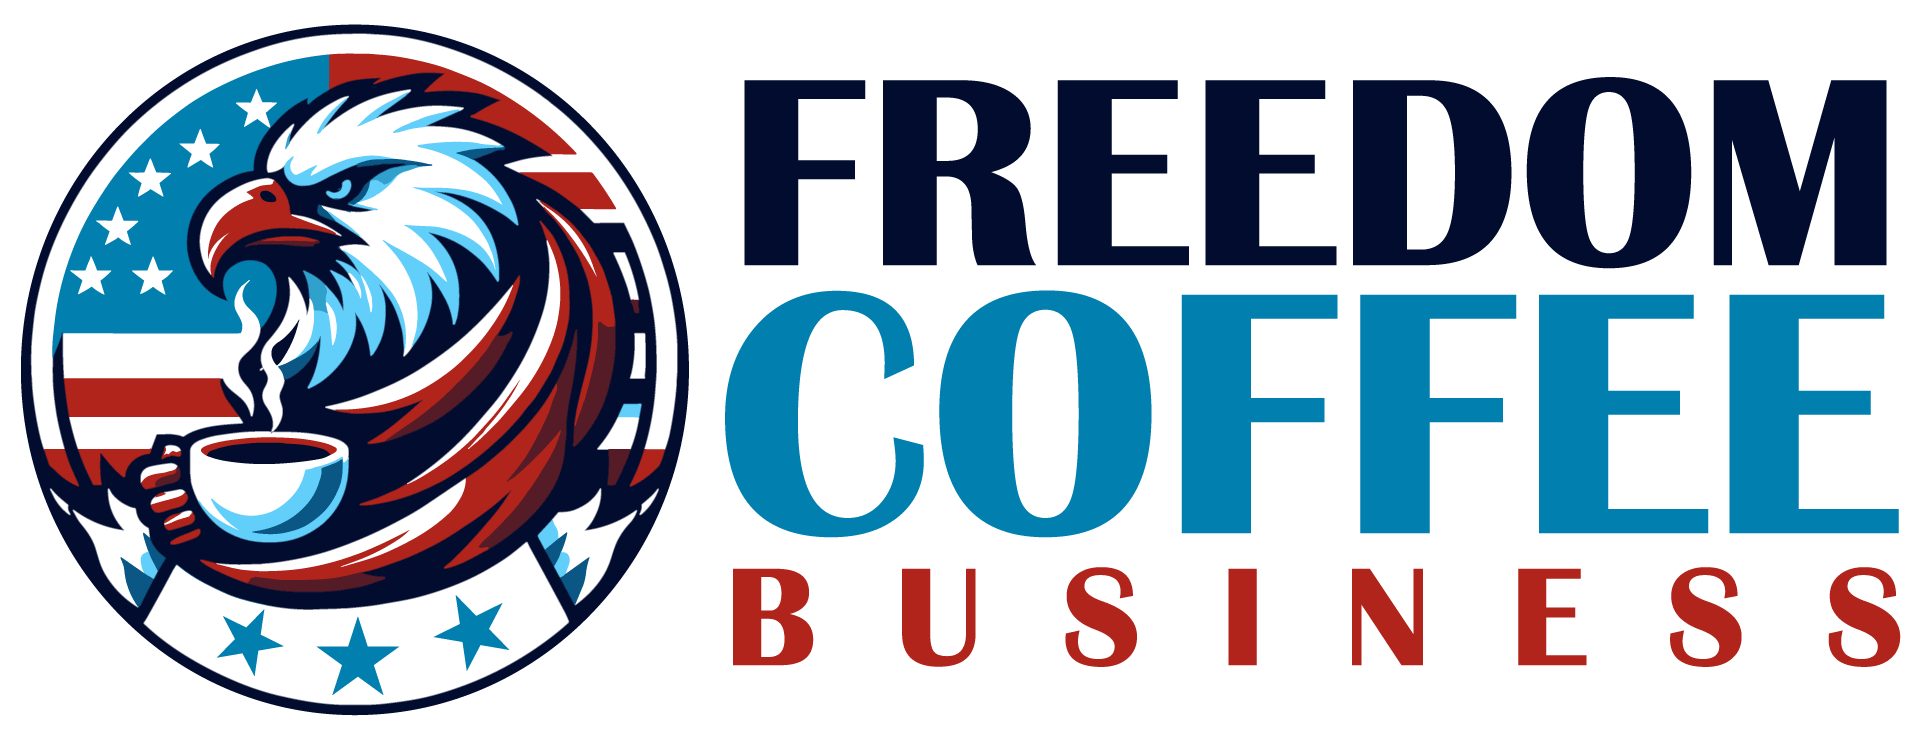 Freedom Coffee Business